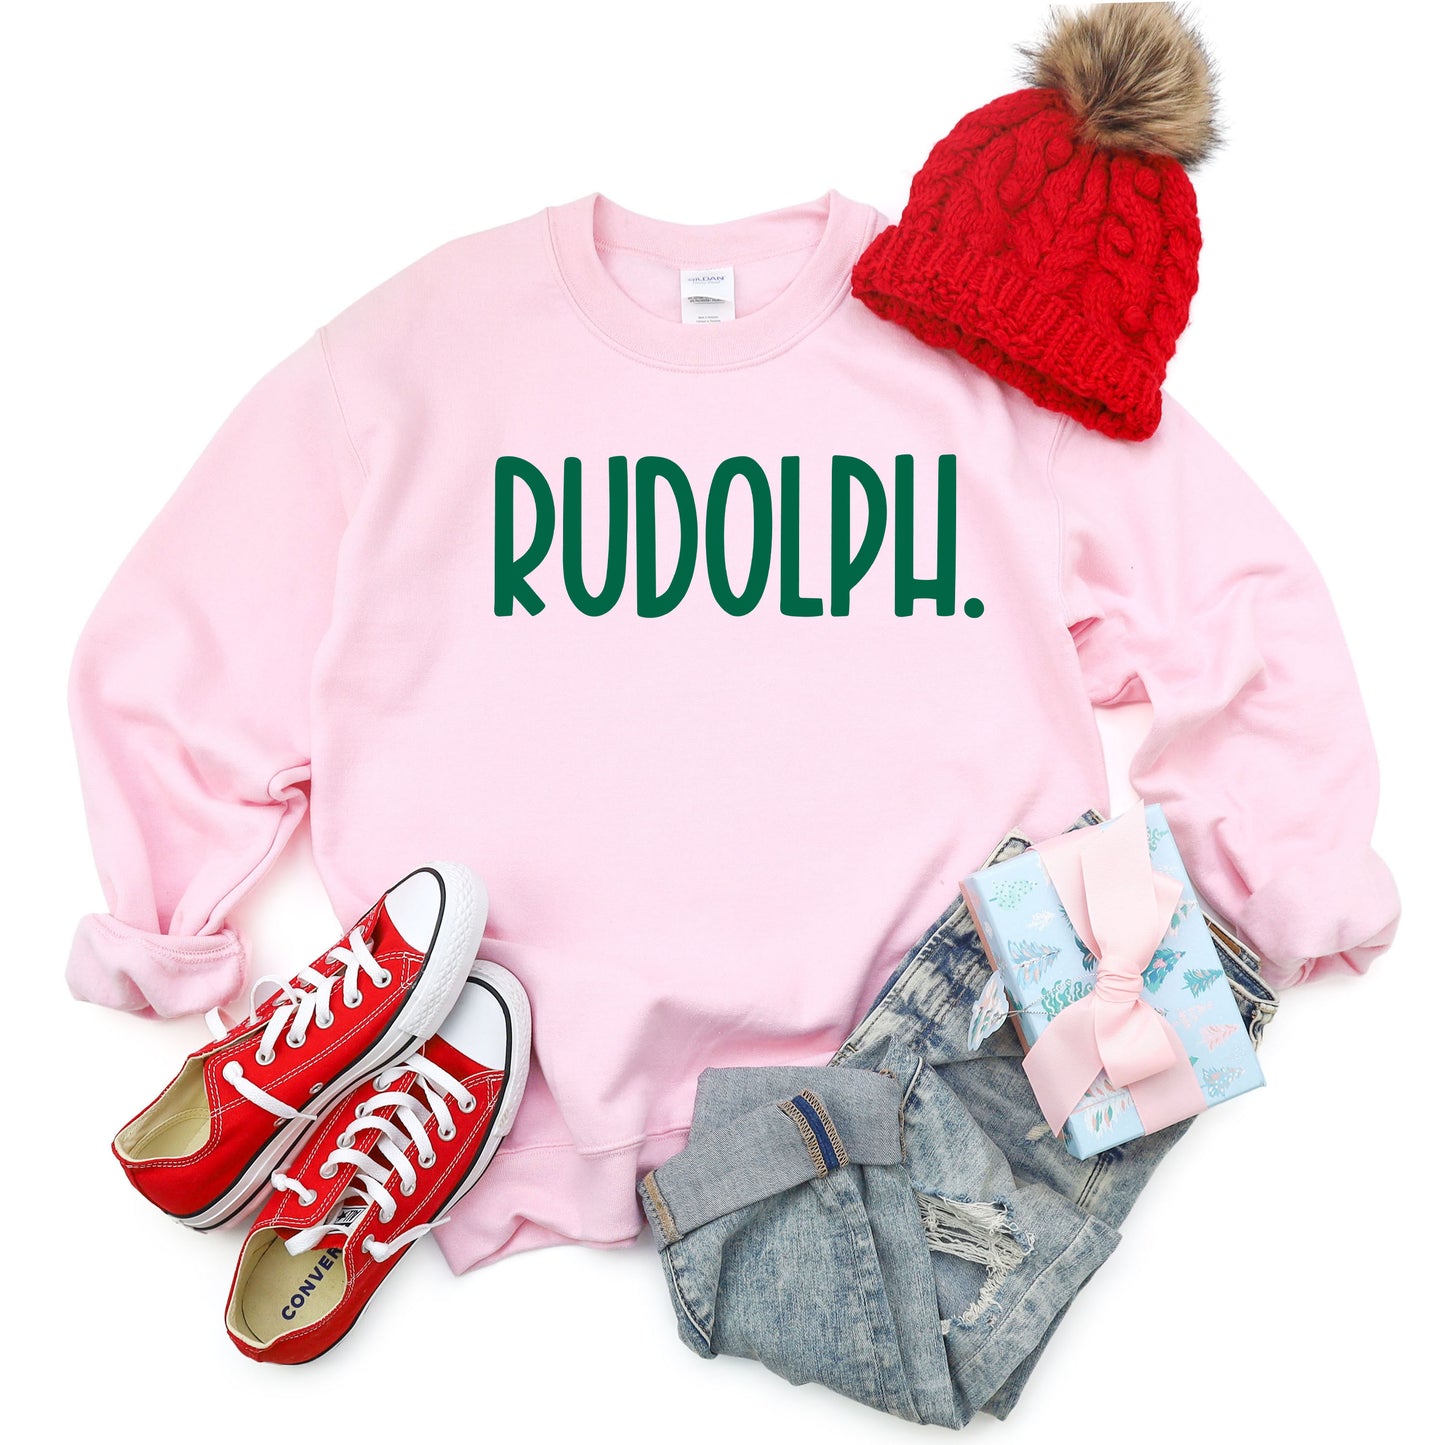 Rudolph Bold |Sweatshirt